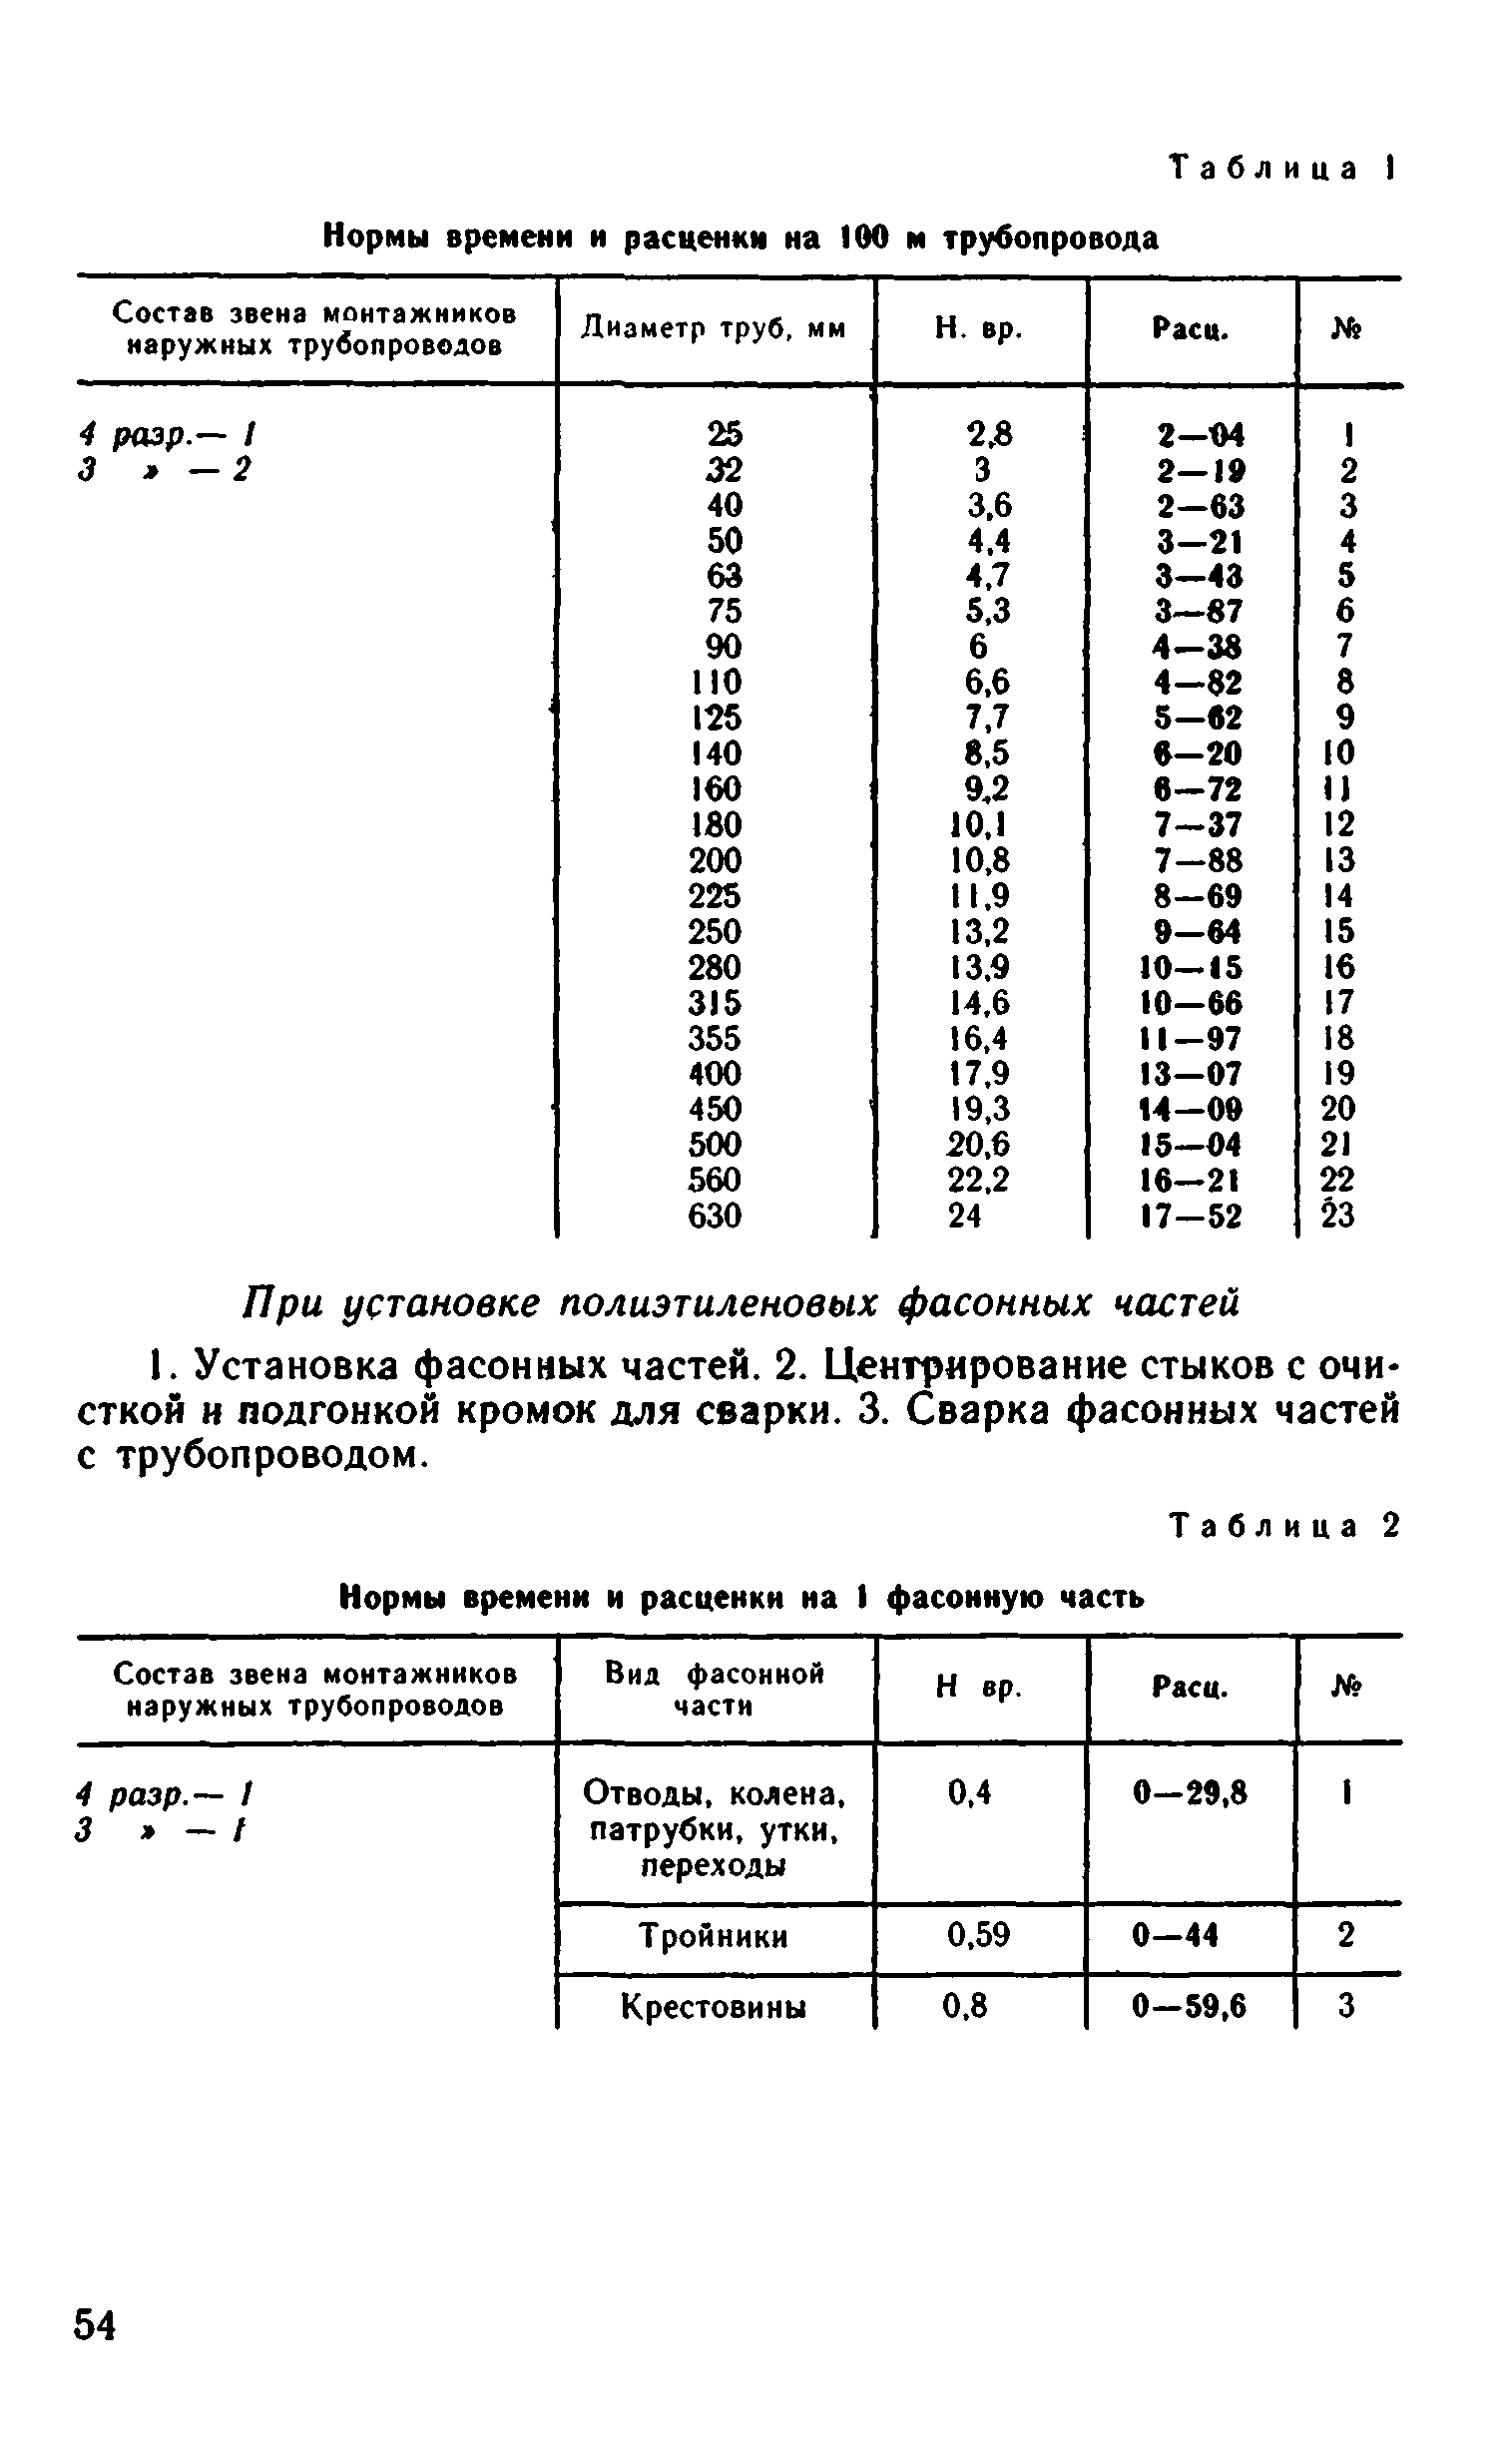 ВНиР В12-3